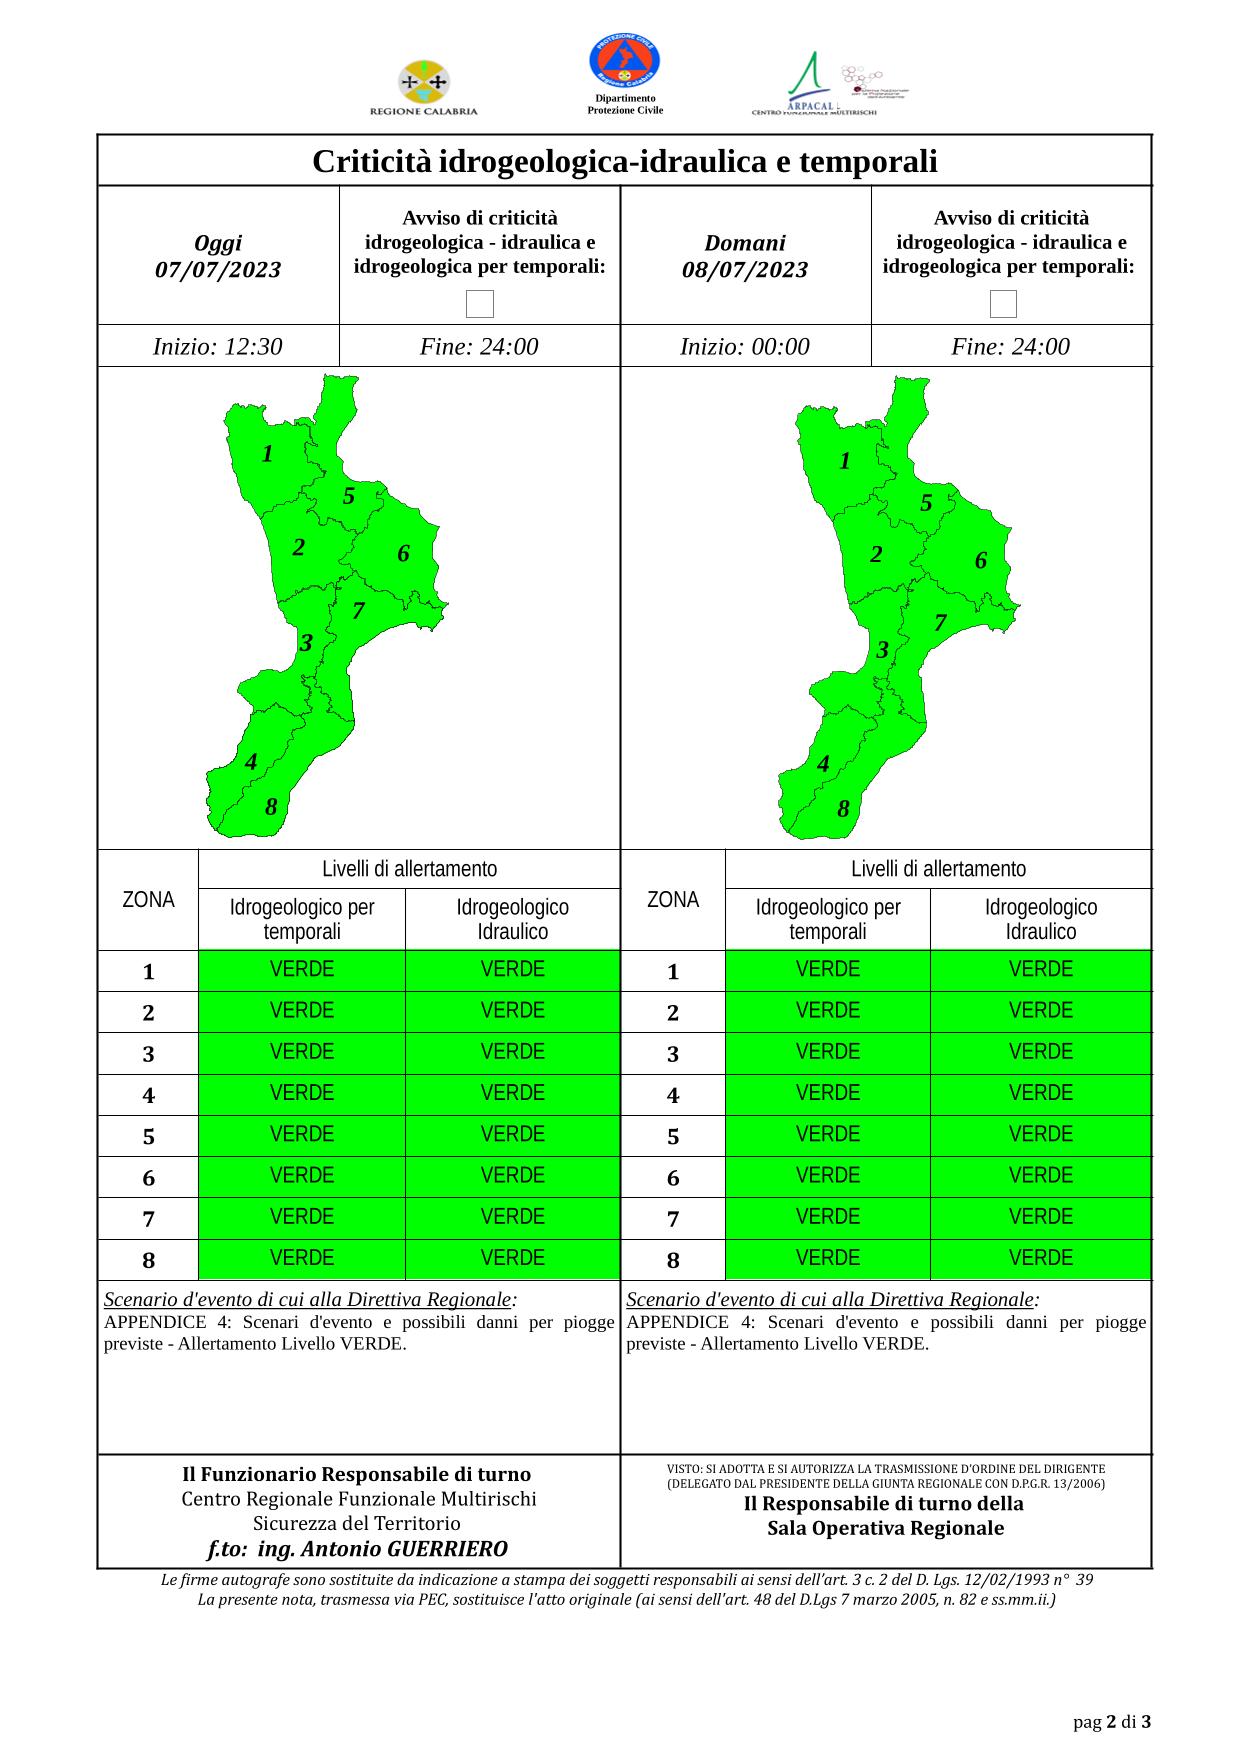 Criticità idrogeologica-idraulica e temporali in Calabria 07-07-2023